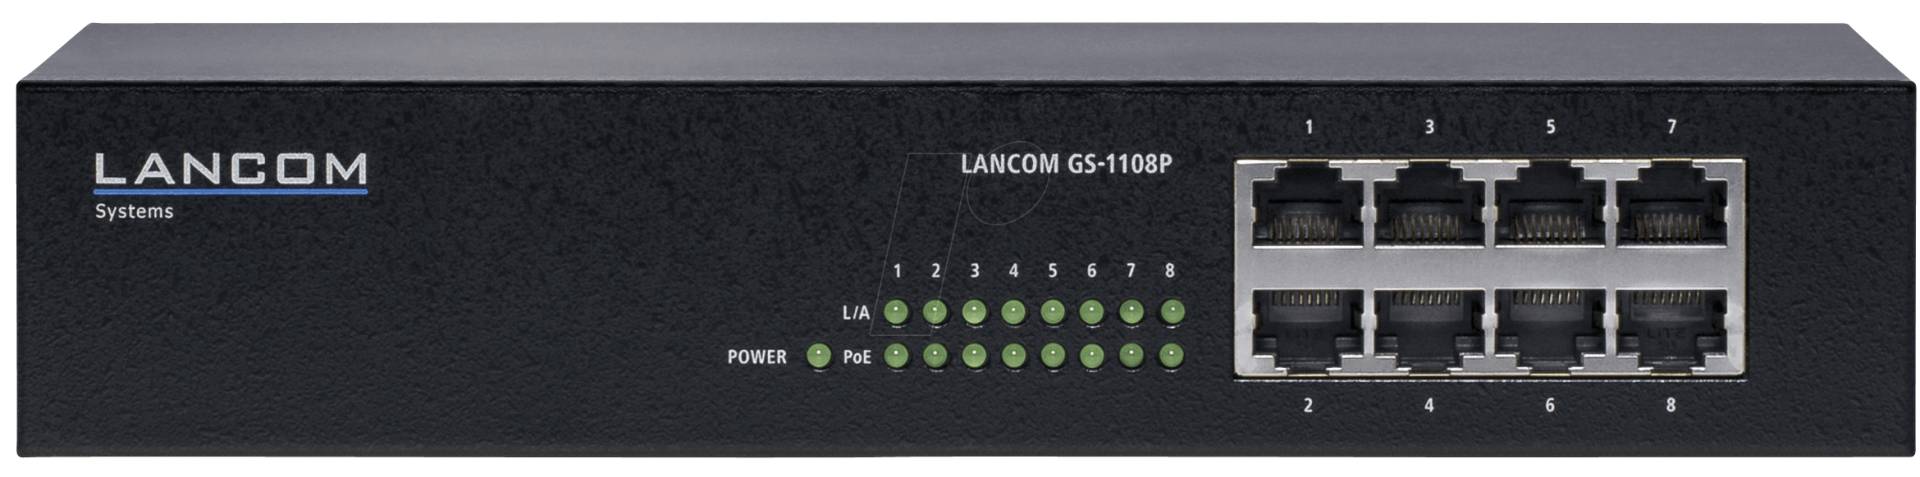 LANCOM GS-1108P - Switch, 8-Port, Gigabit Ethernet, PoE von Lancom